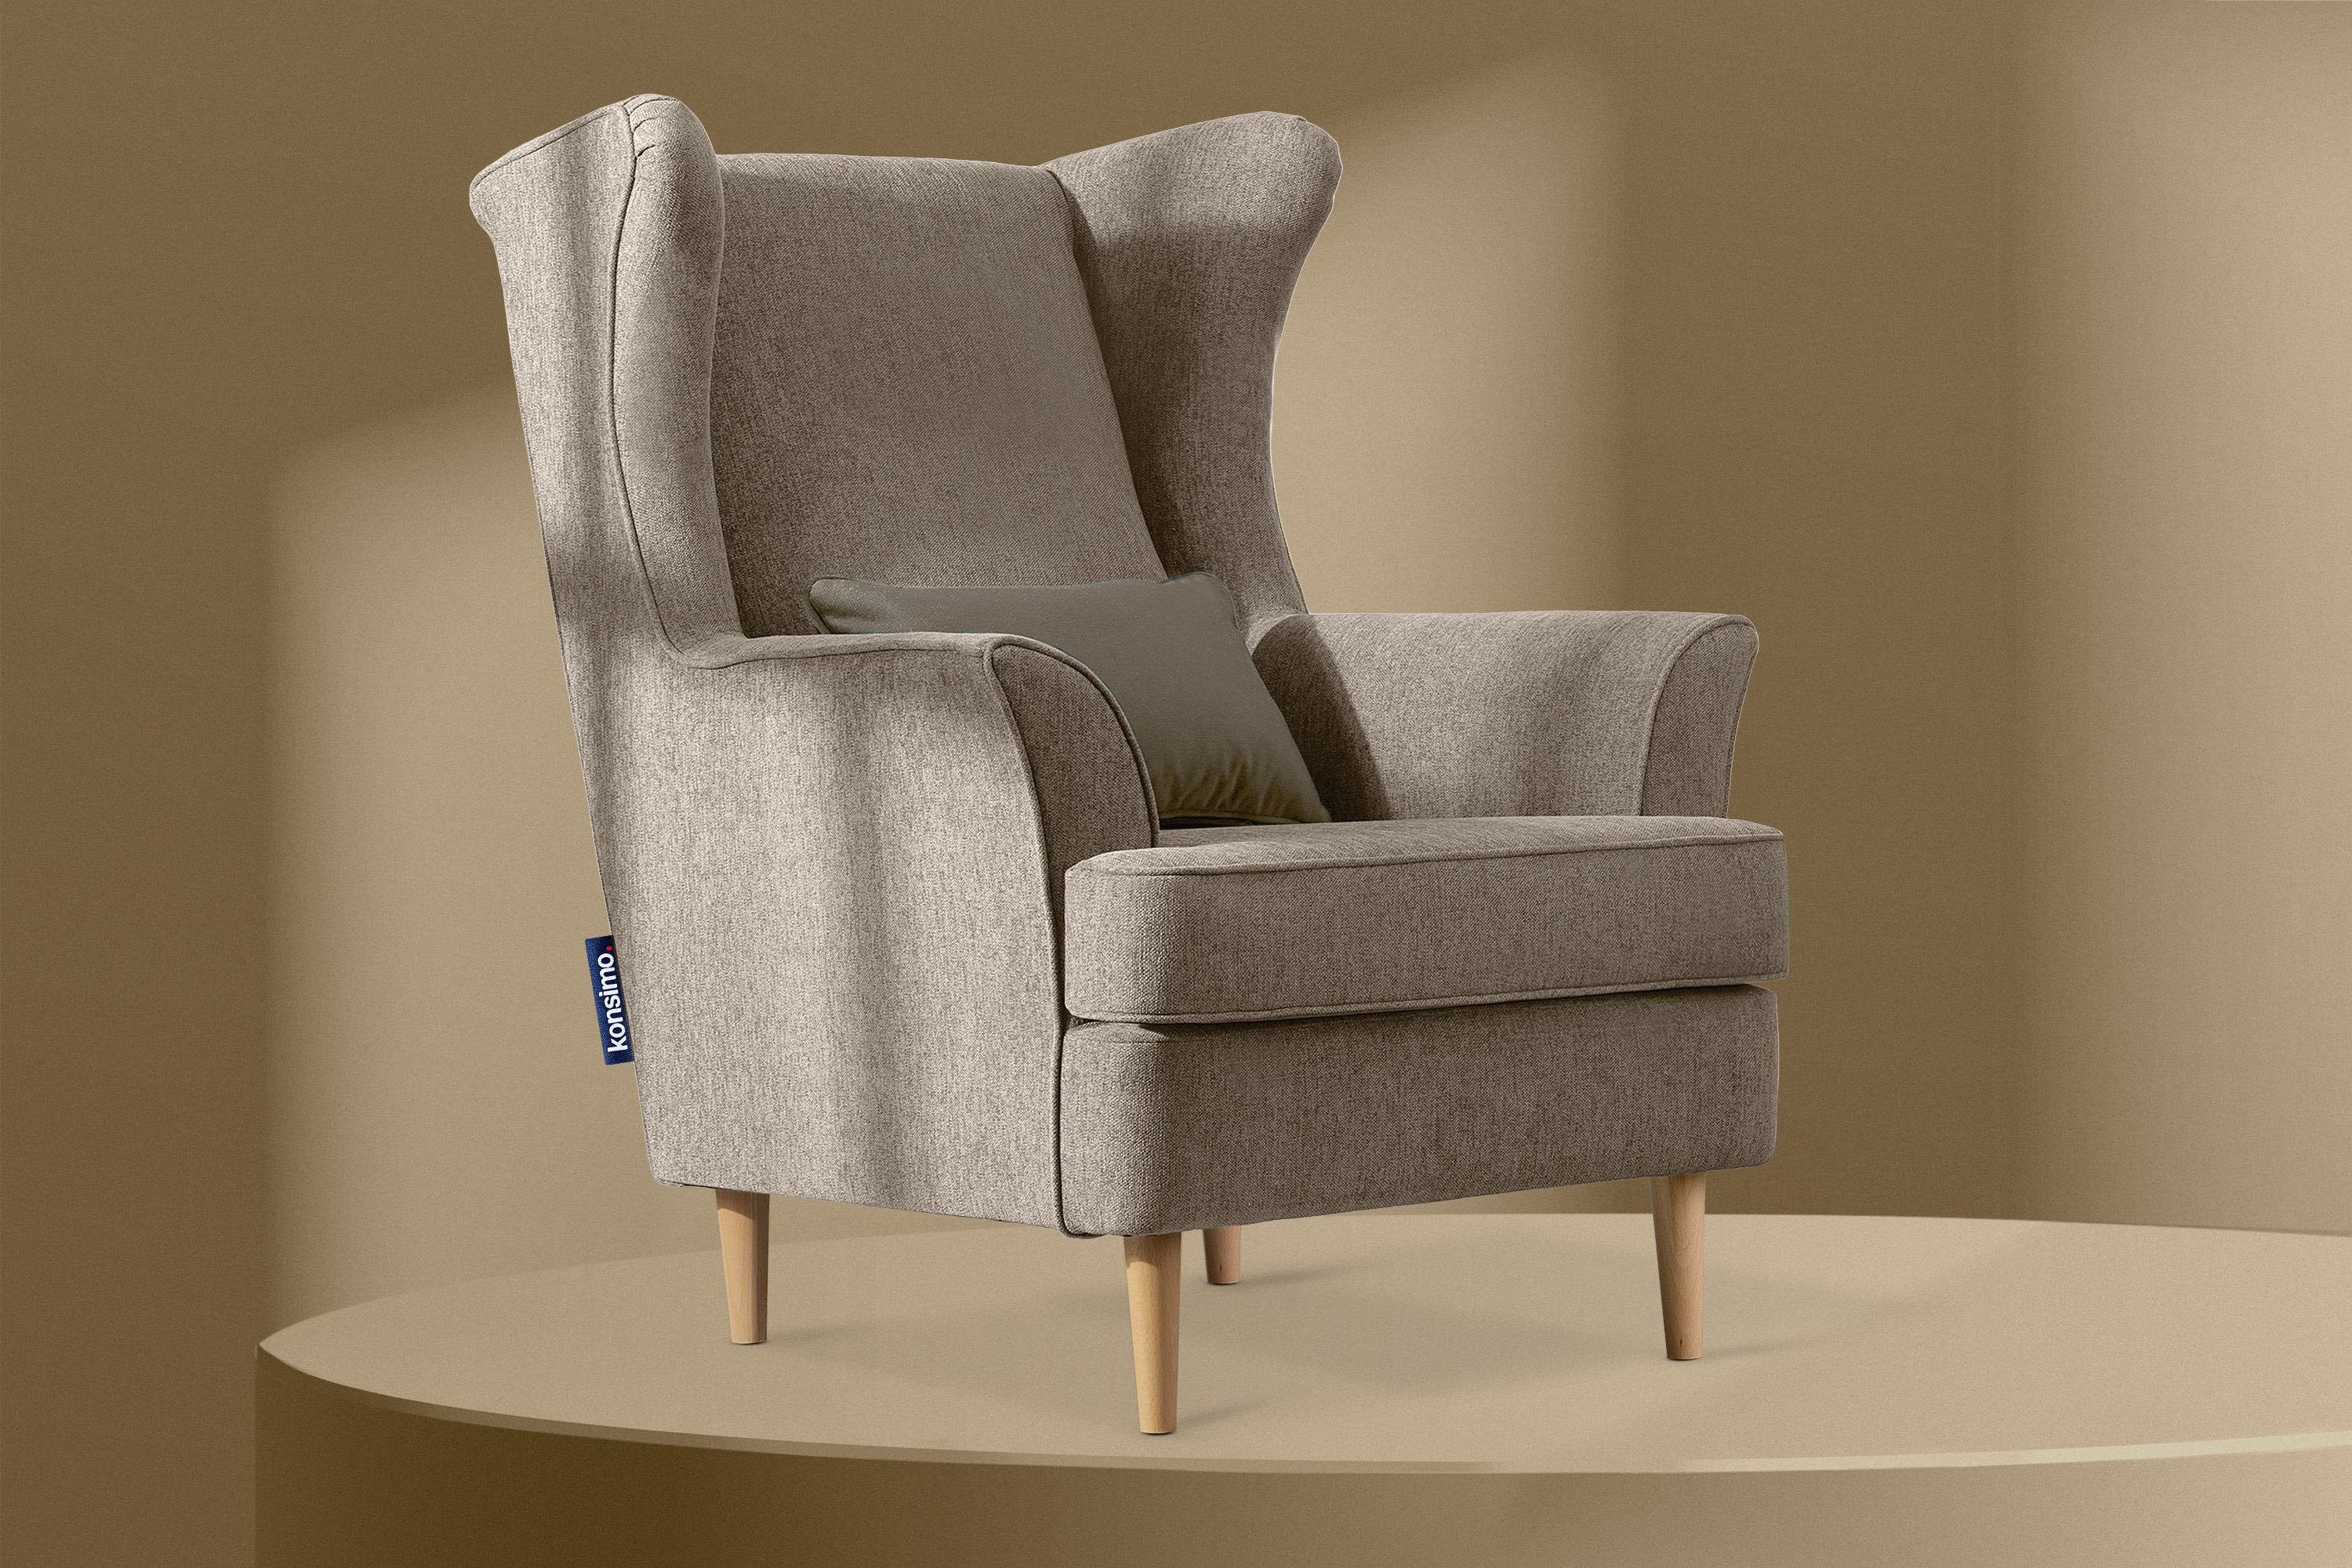 Konsimo Ohrensessel STRALIS inklusive Füße, Kissen hohe Design, dekorativem Sessel, zeitloses